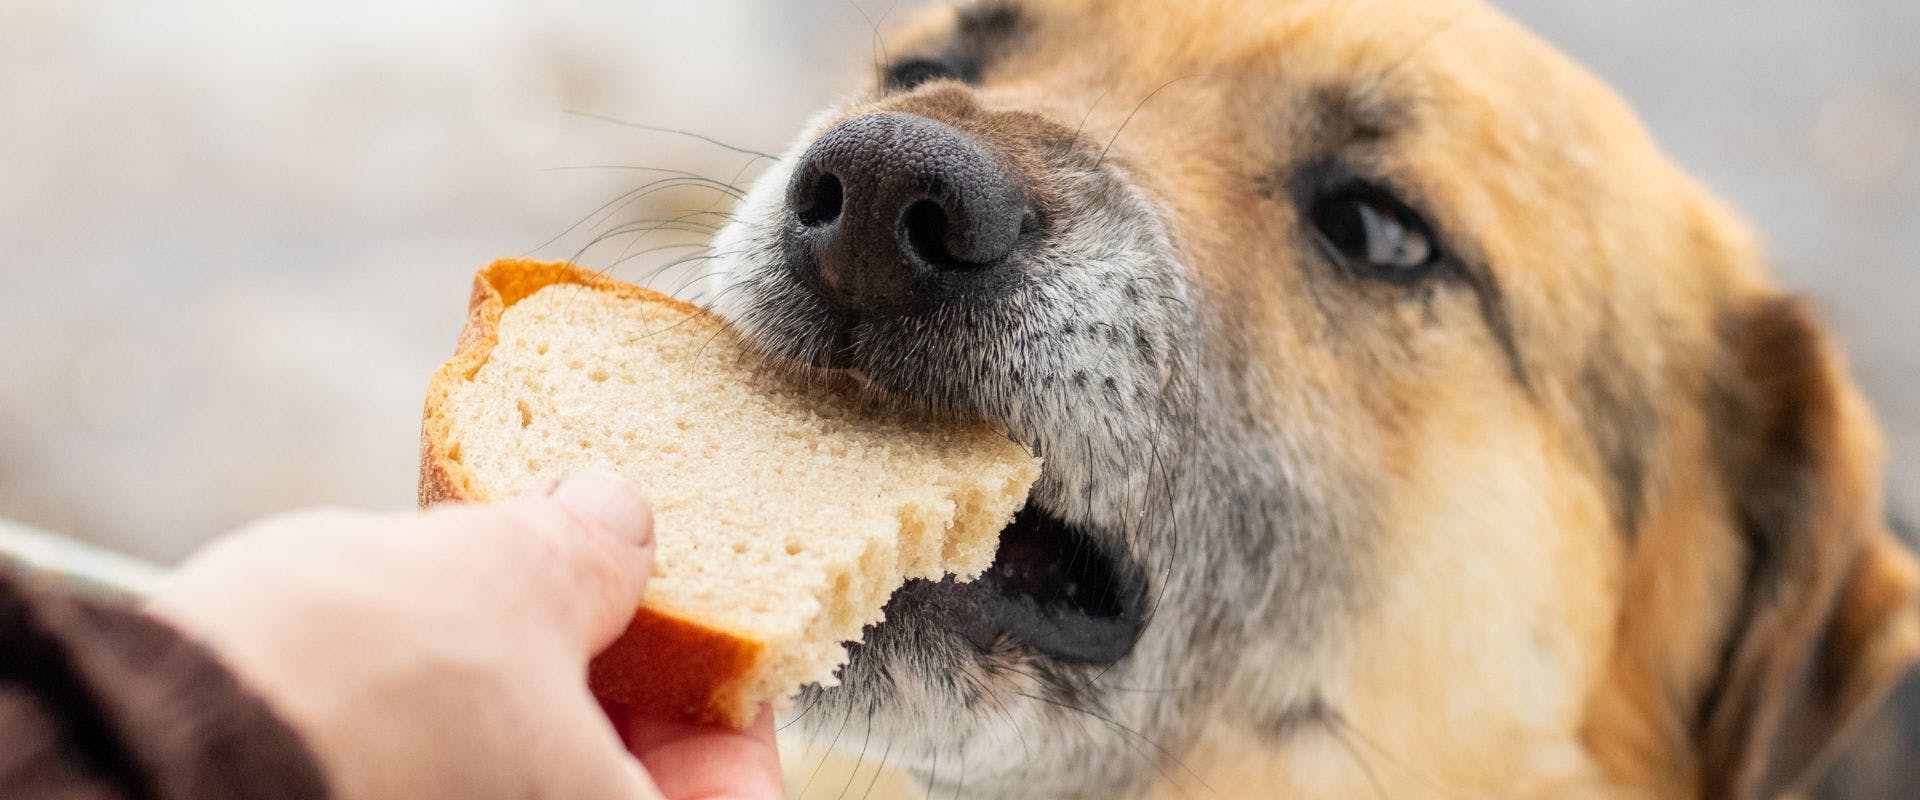 Dog eating bread slice